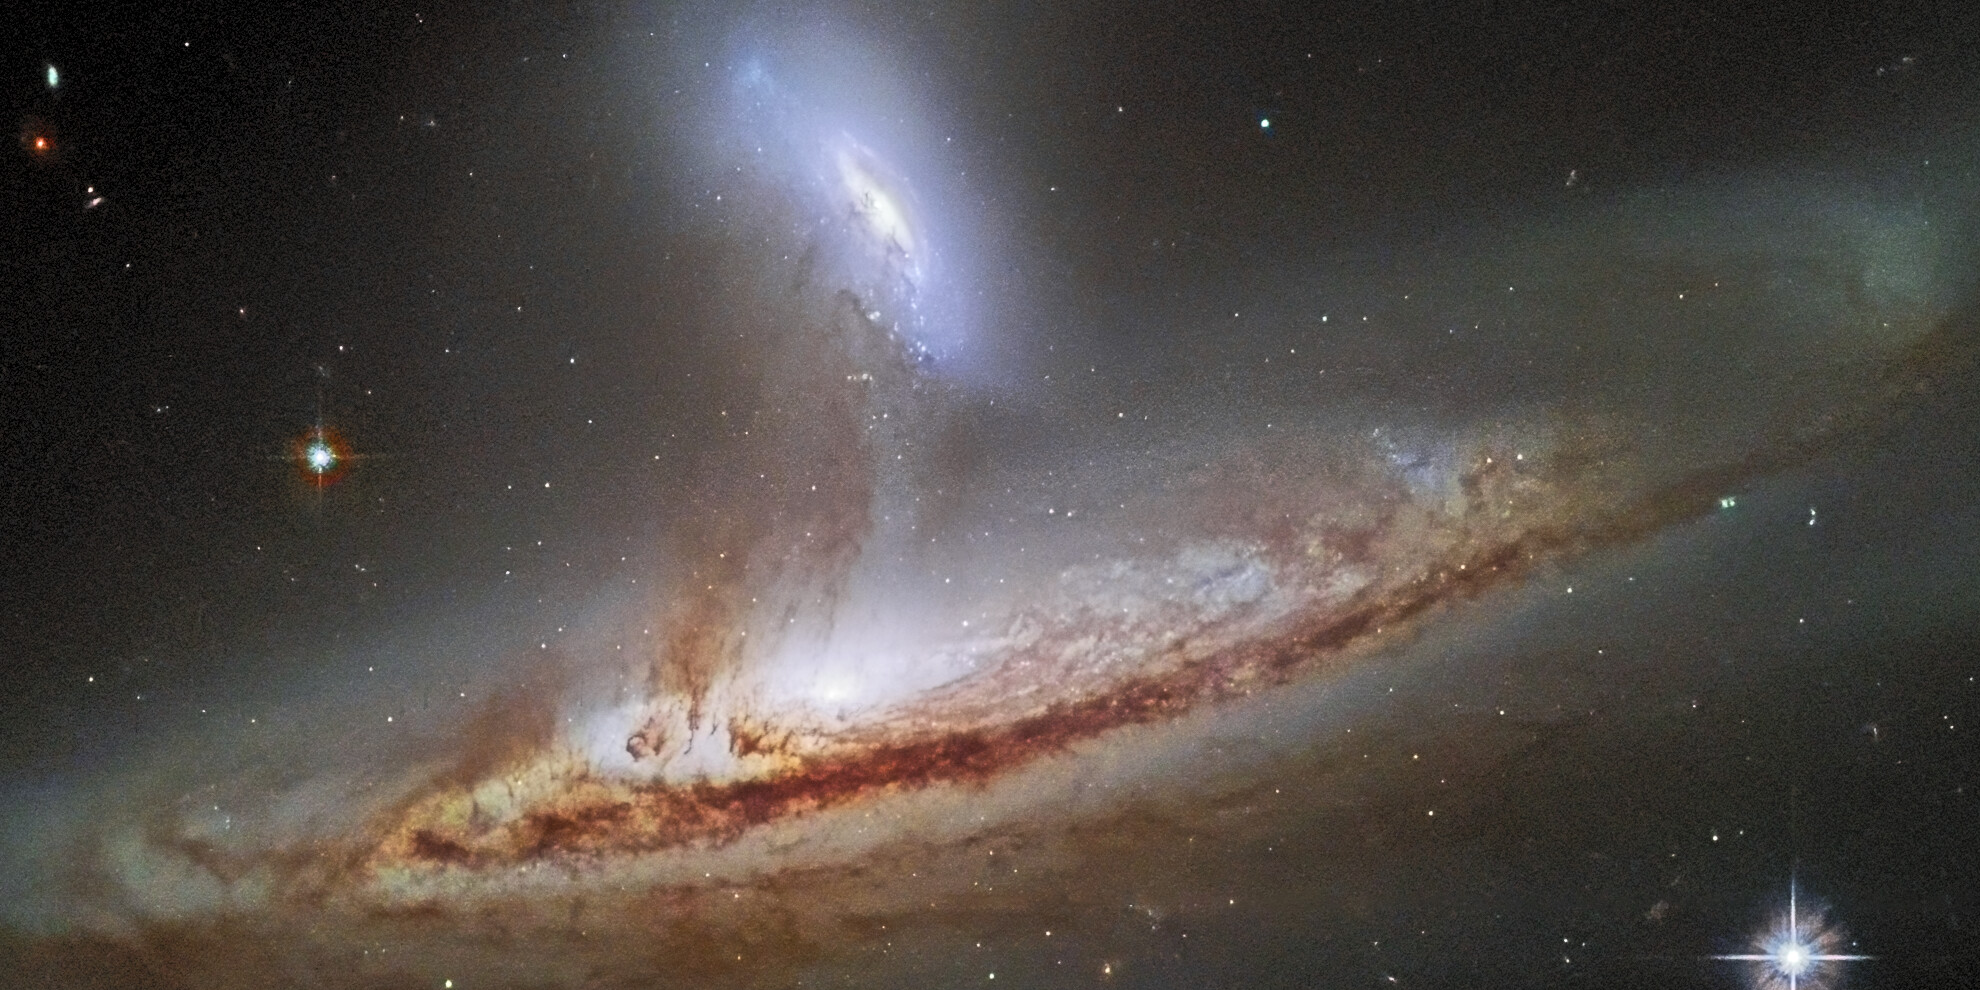 Hubble photo of galaxies NGC 169 and IC 1559